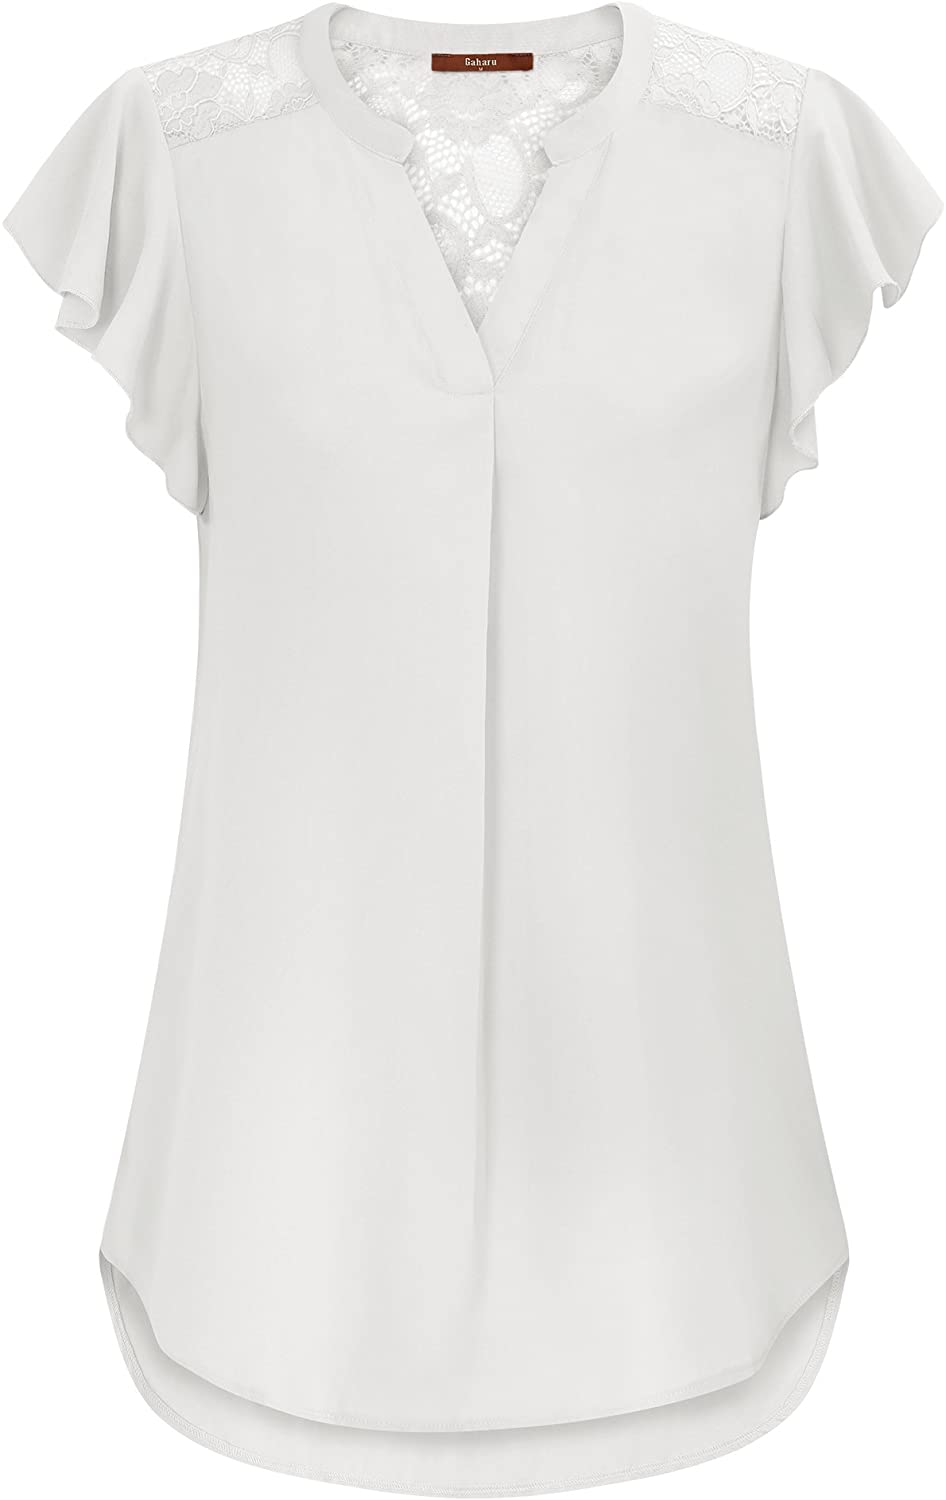 Gaharu Womens Notch V Neck Short Sleeve Chiffon Shirts Casual Lace Blouse Top 